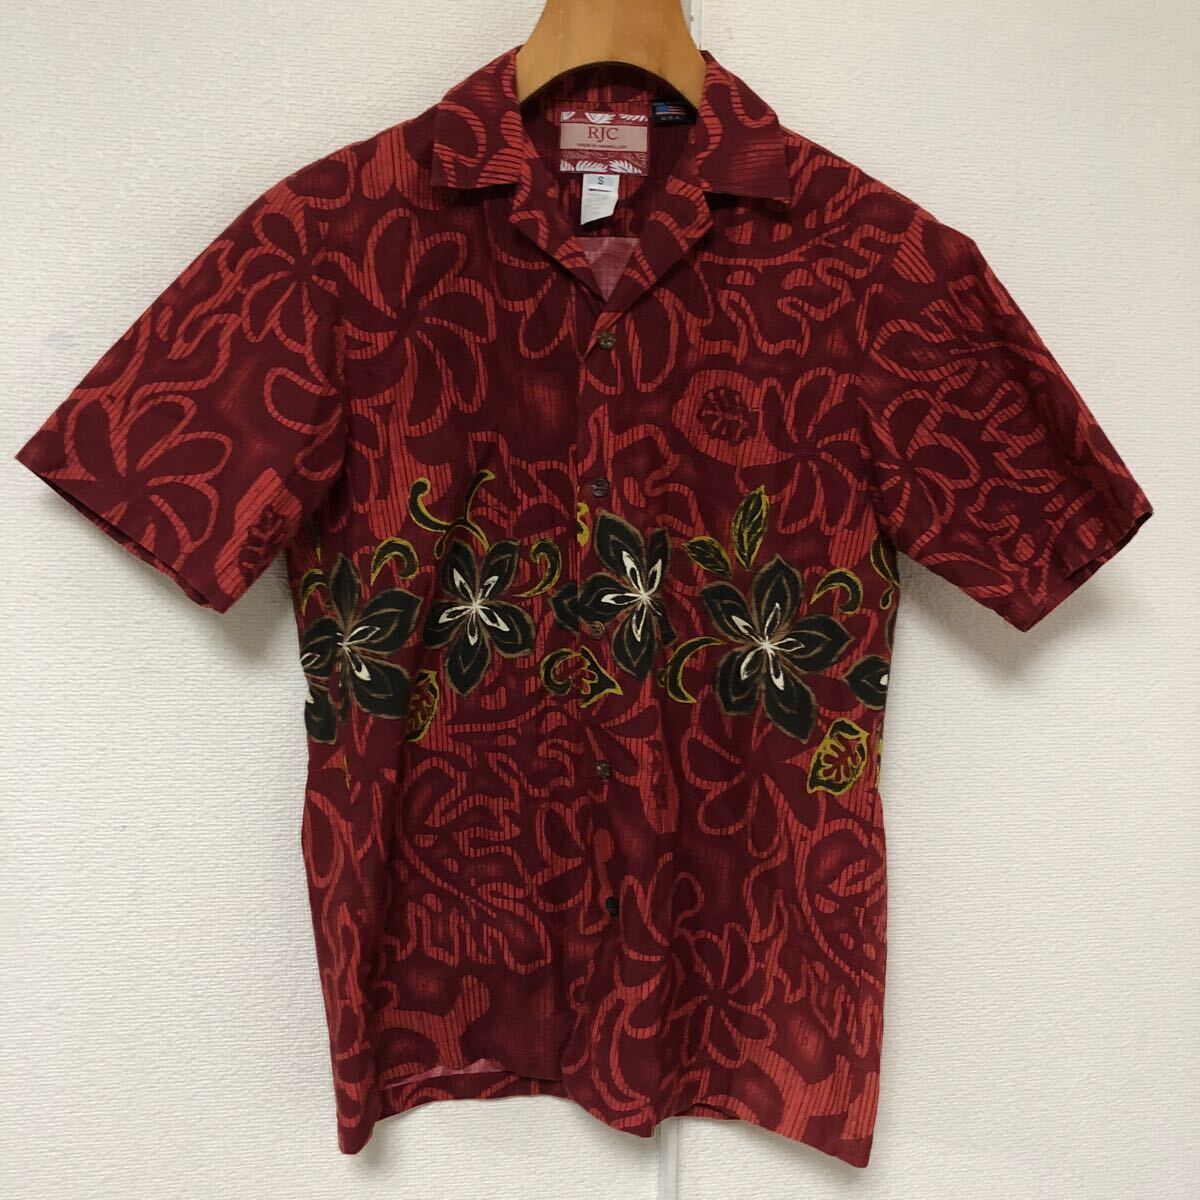 USA производства RJC Robert JC хлопок гибискус гавайская рубашка Hawaiian рубашка S Гаваи производства 